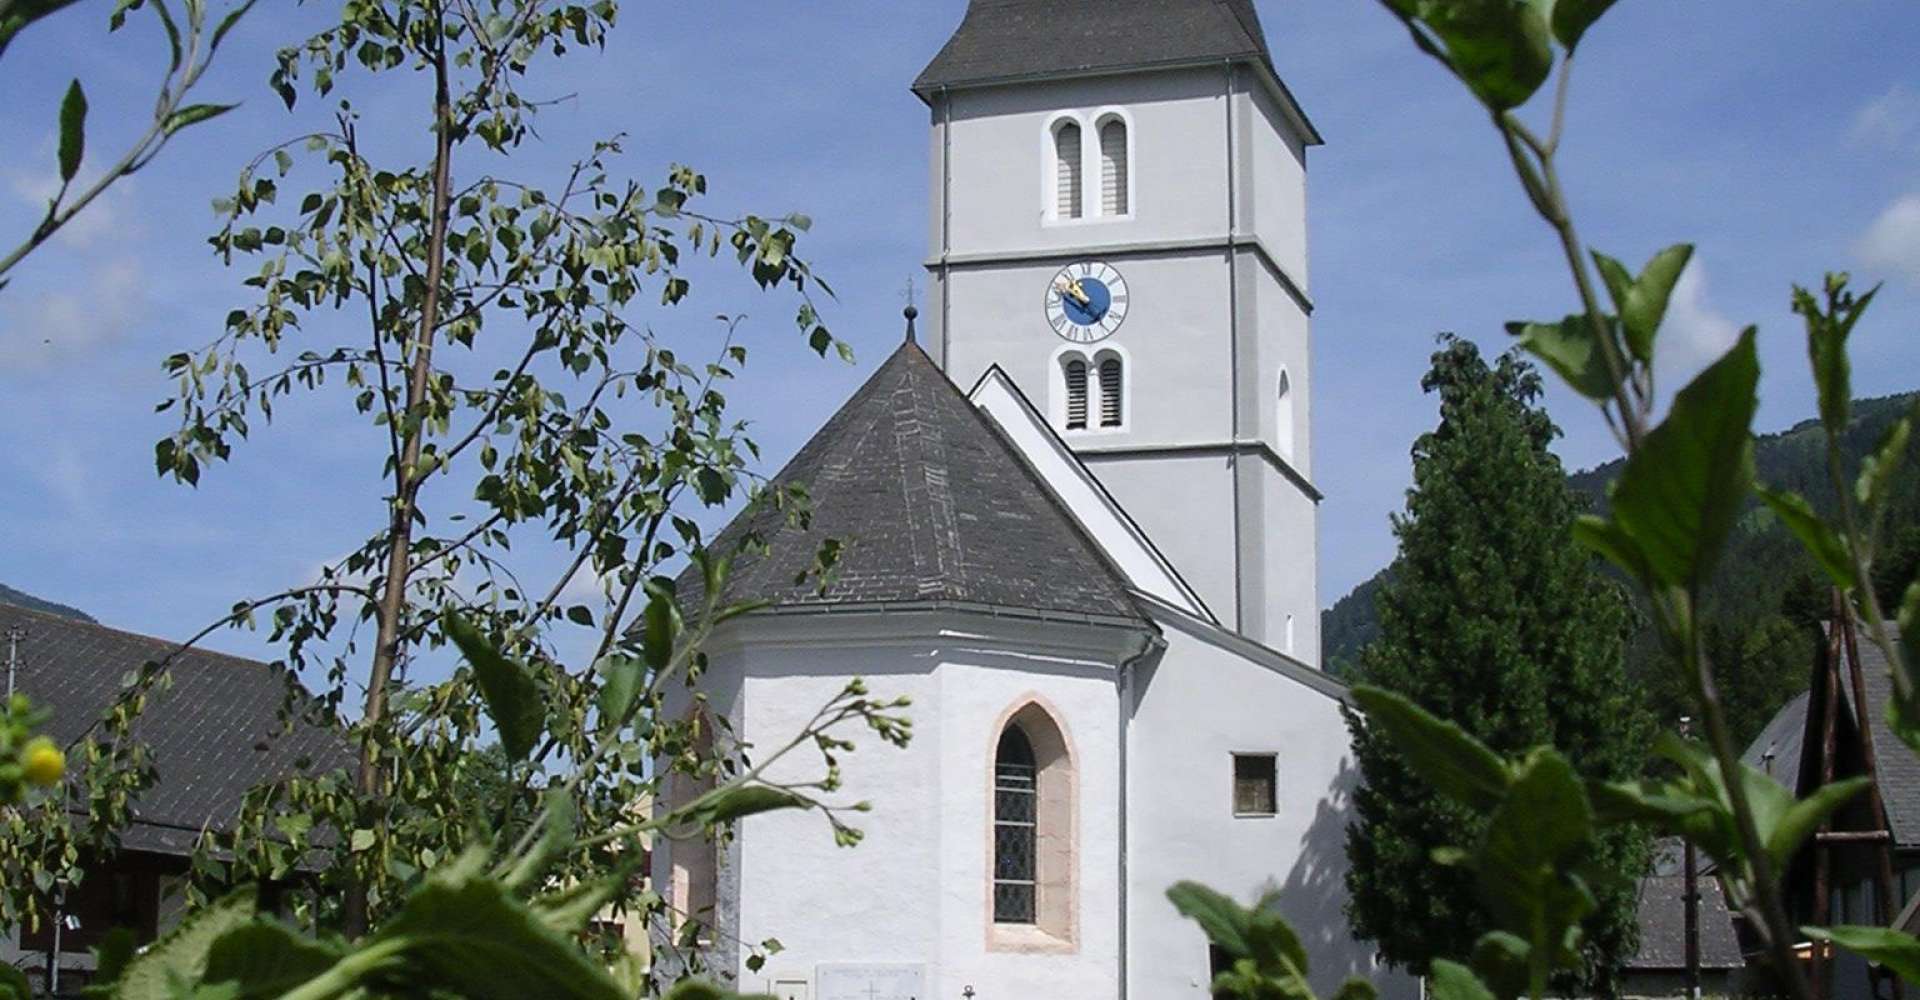  Copyright:Kath. Kirche "Maria im Moos" Pusterwald